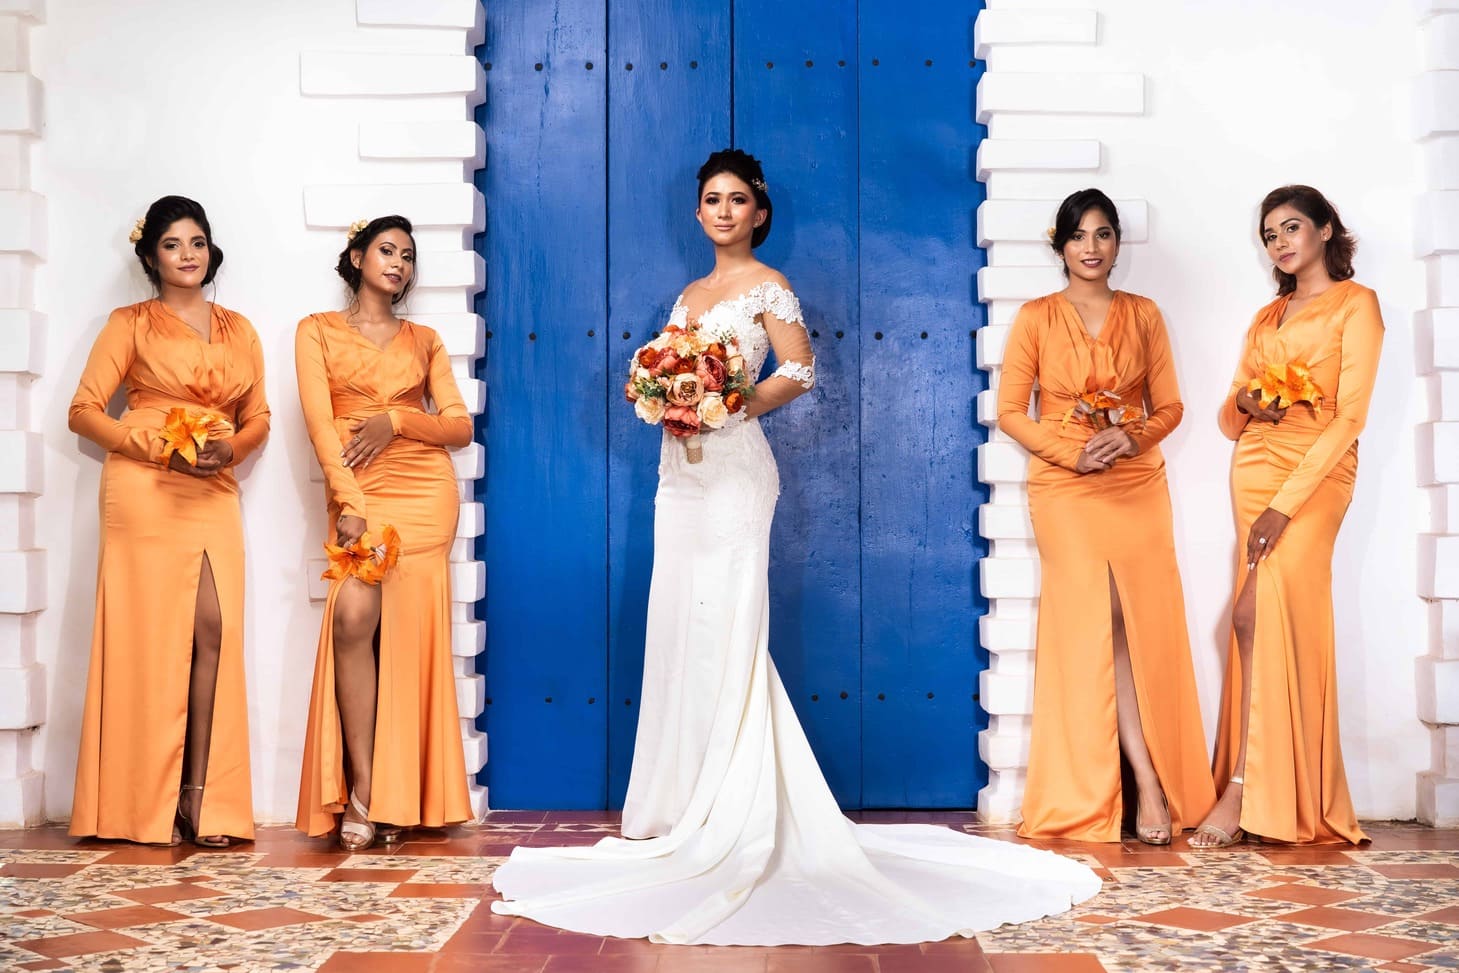 Natalinas Weddings | Bridal boutique goa | Goa, India